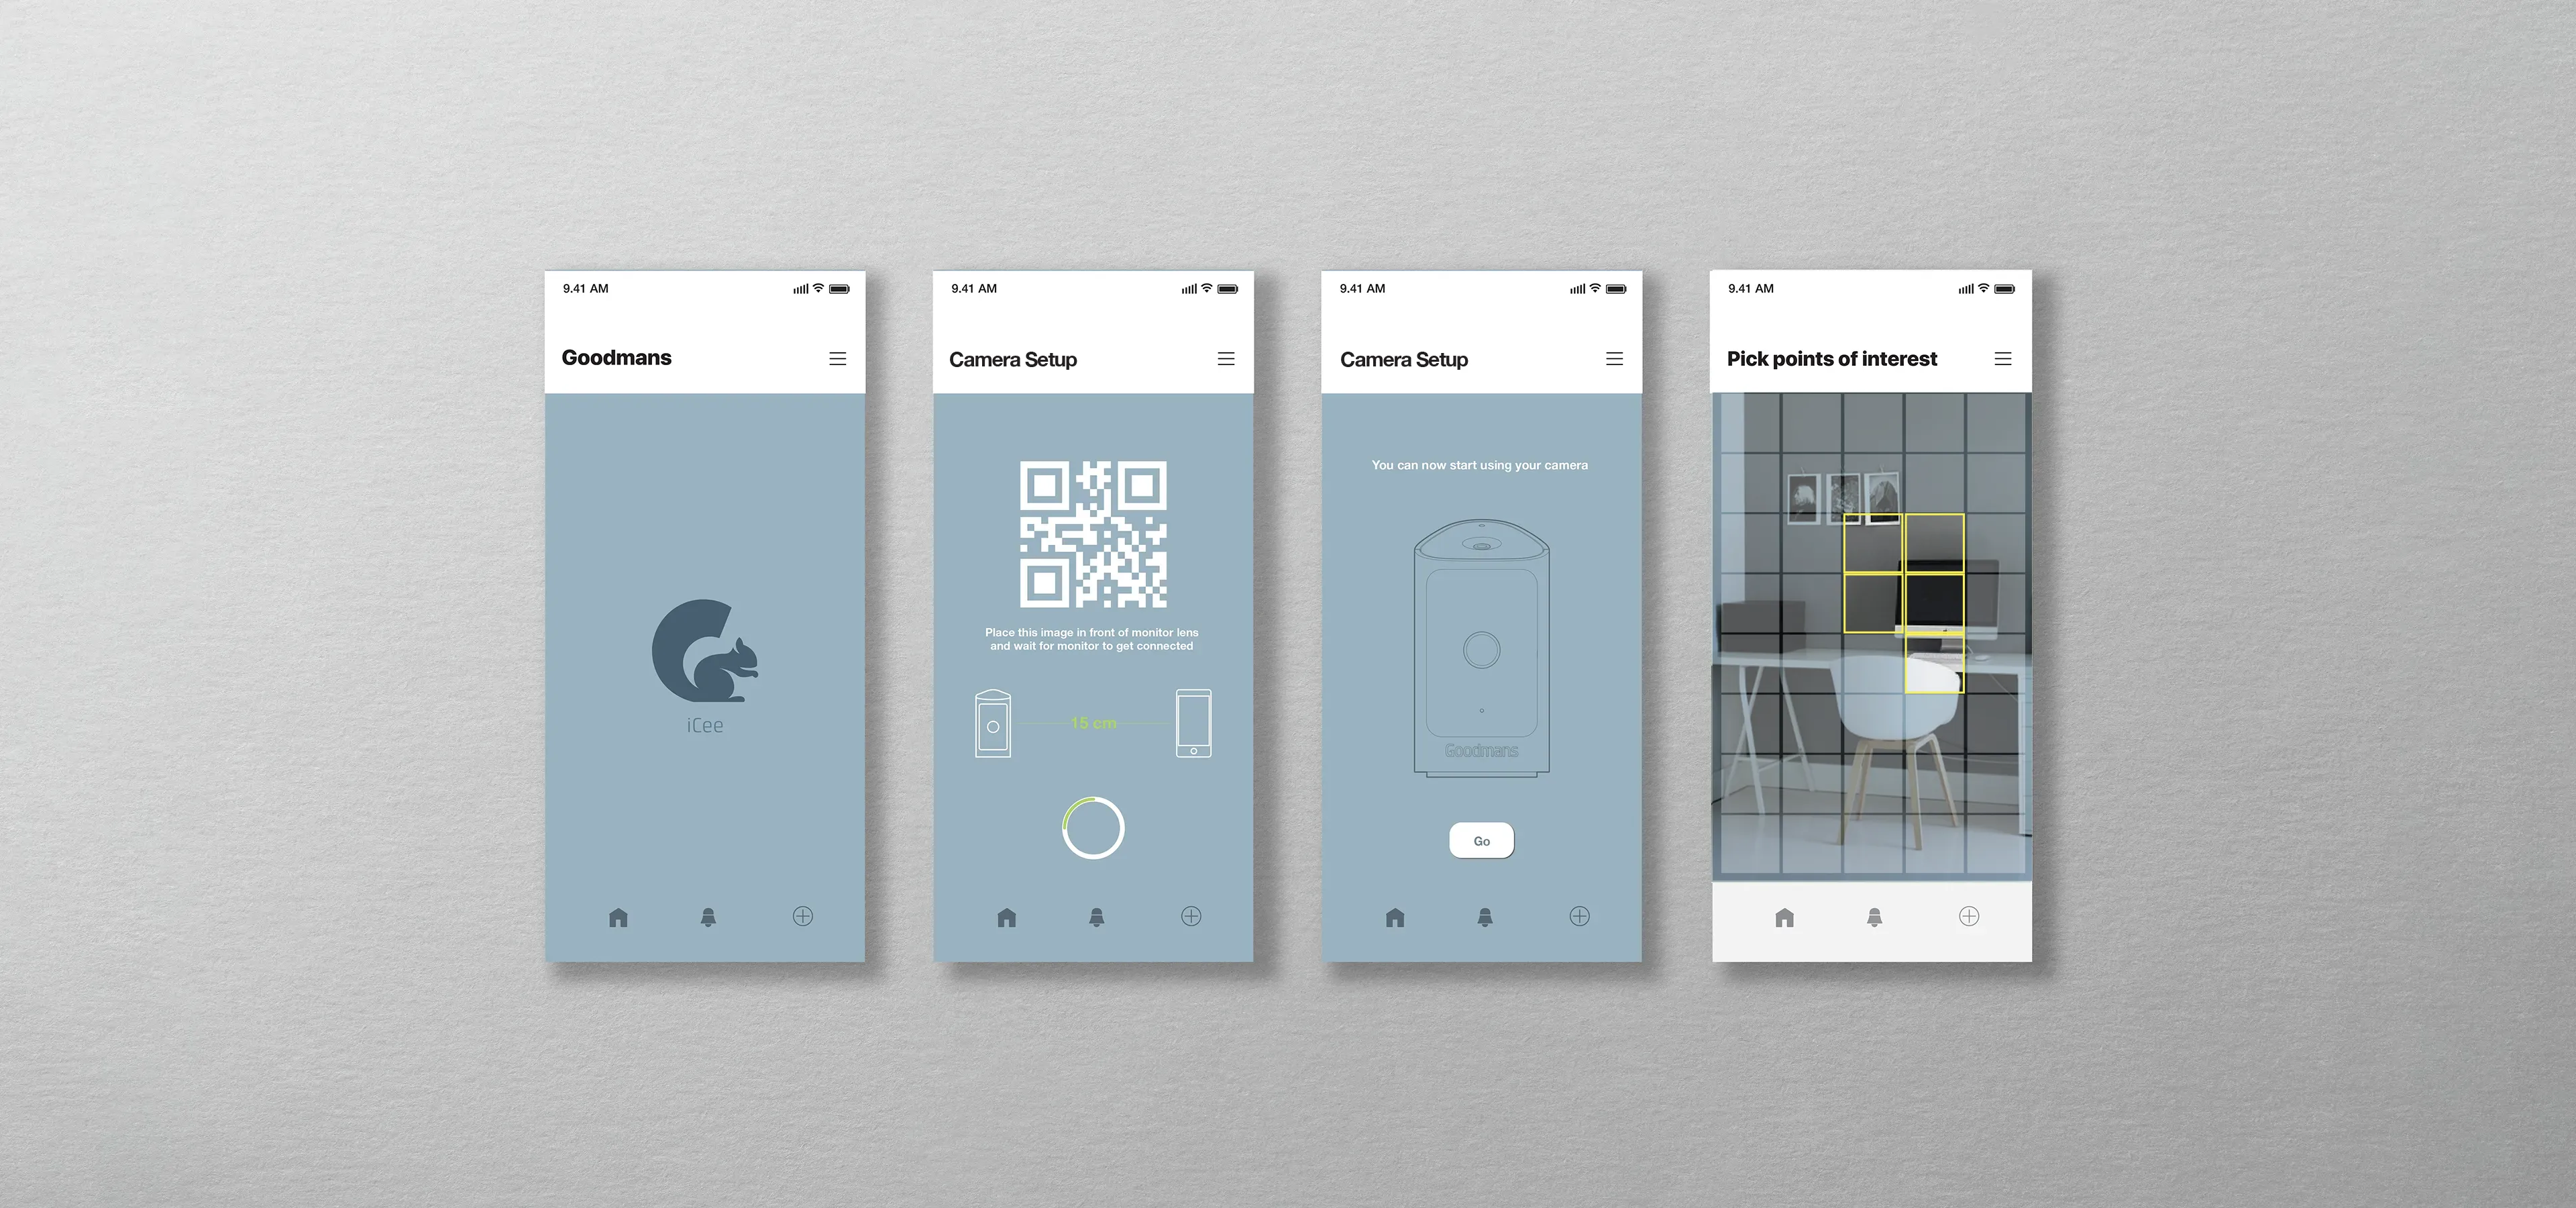 Digital design of the iCee app